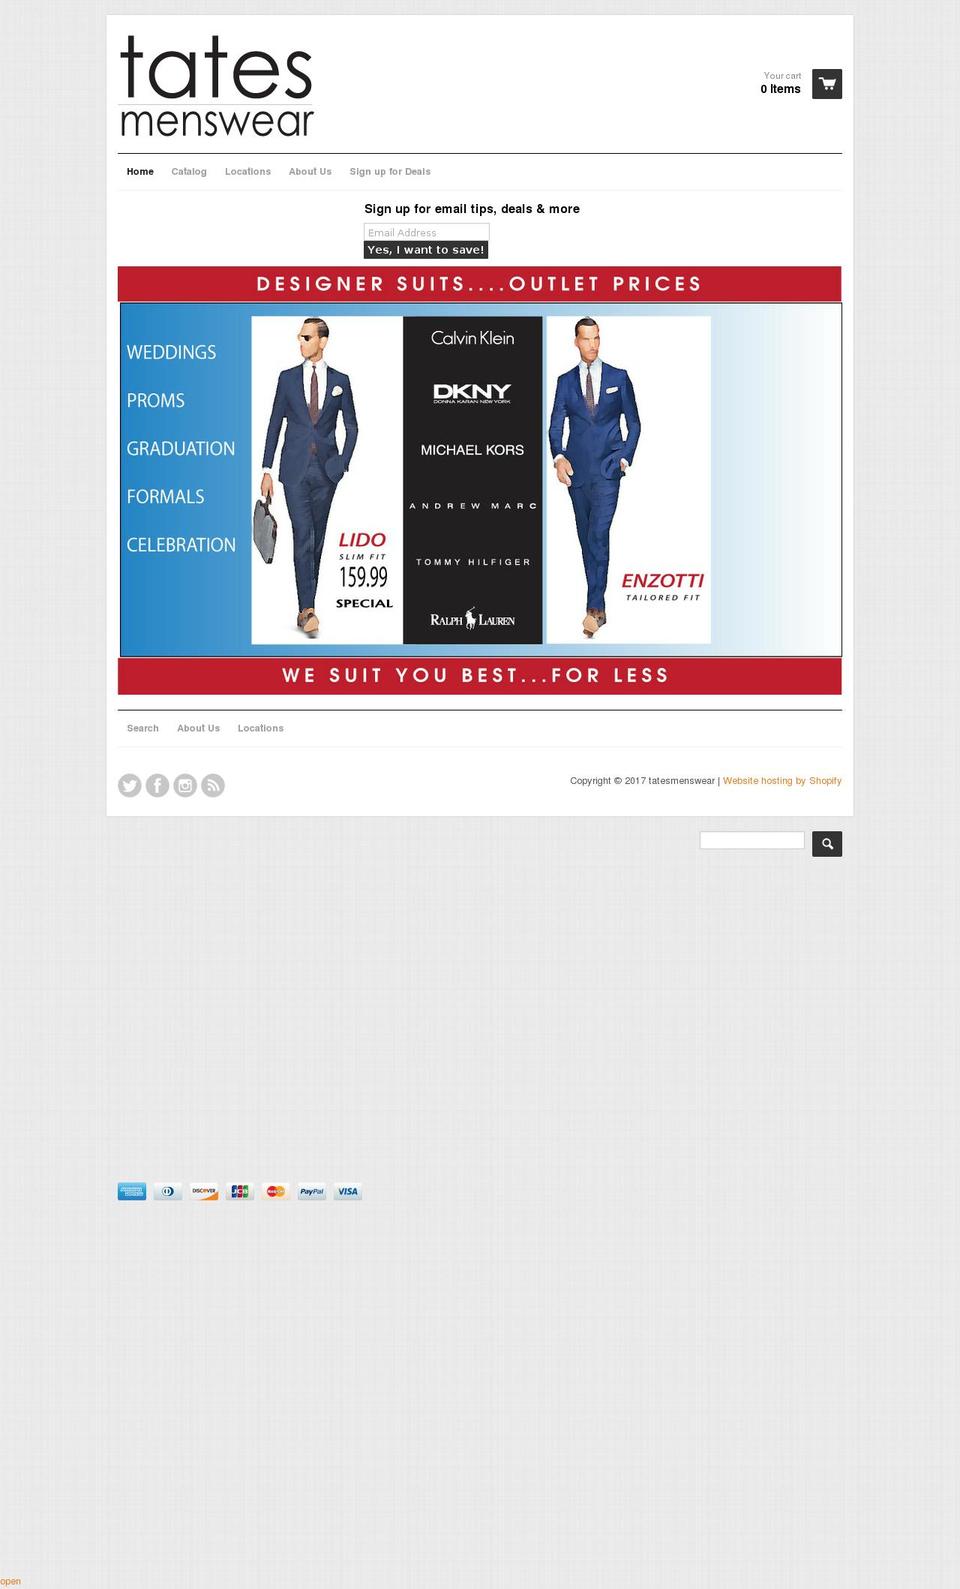 React Shopify theme site example tatesmenswear.com